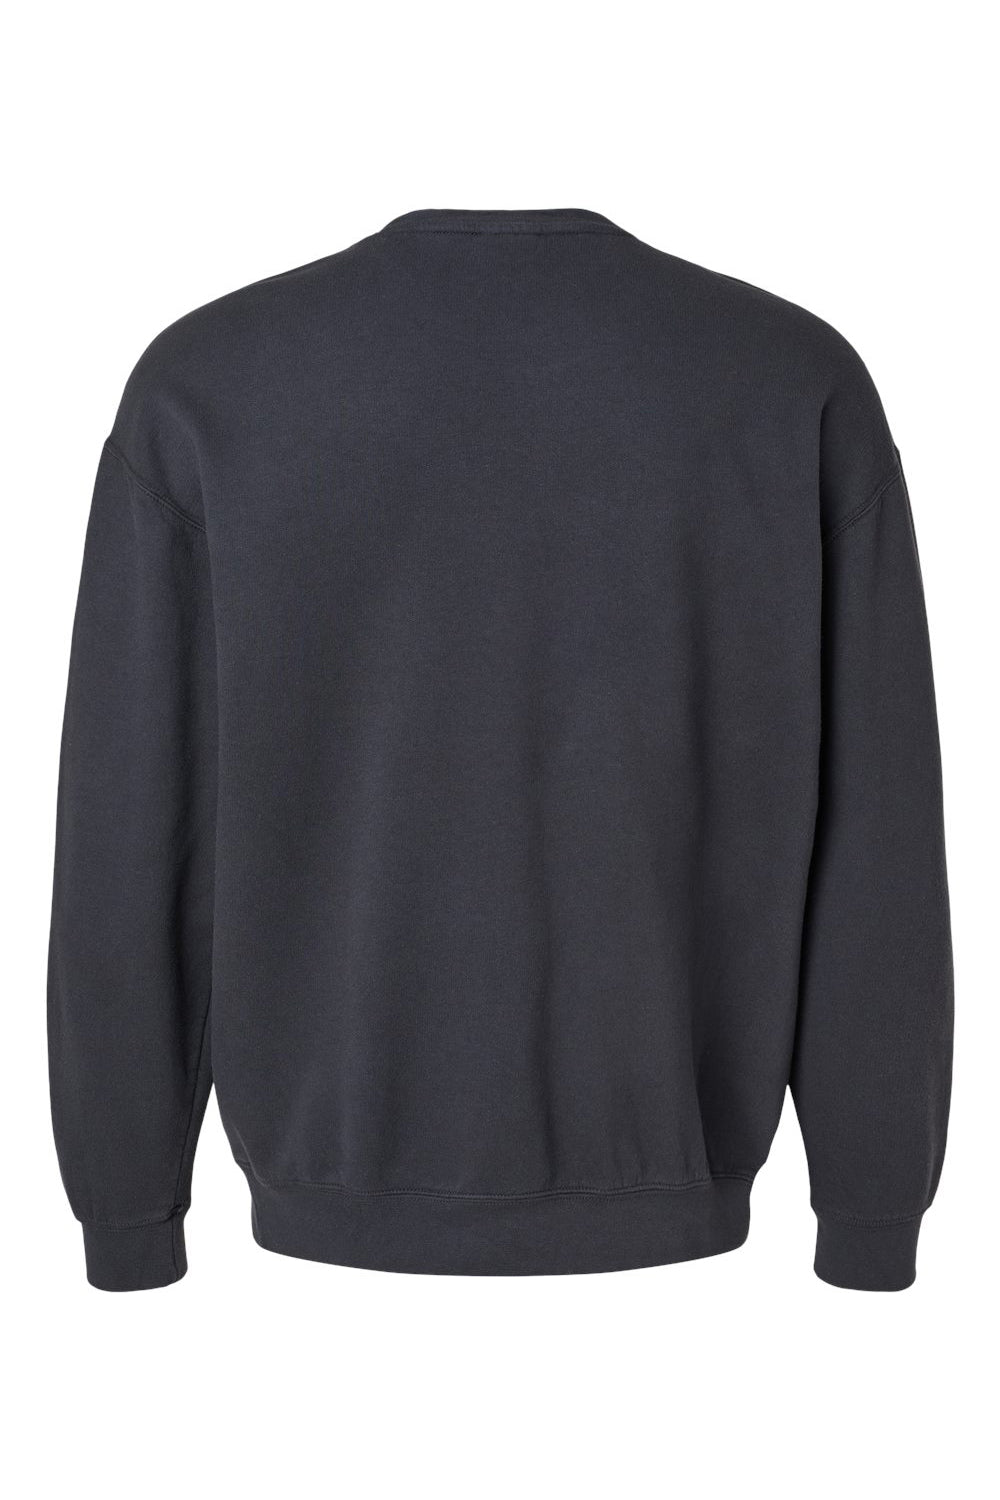 Comfort Colors 1466 Mens Garment Dyed Fleece Crewneck Sweatshirt Black Flat Back